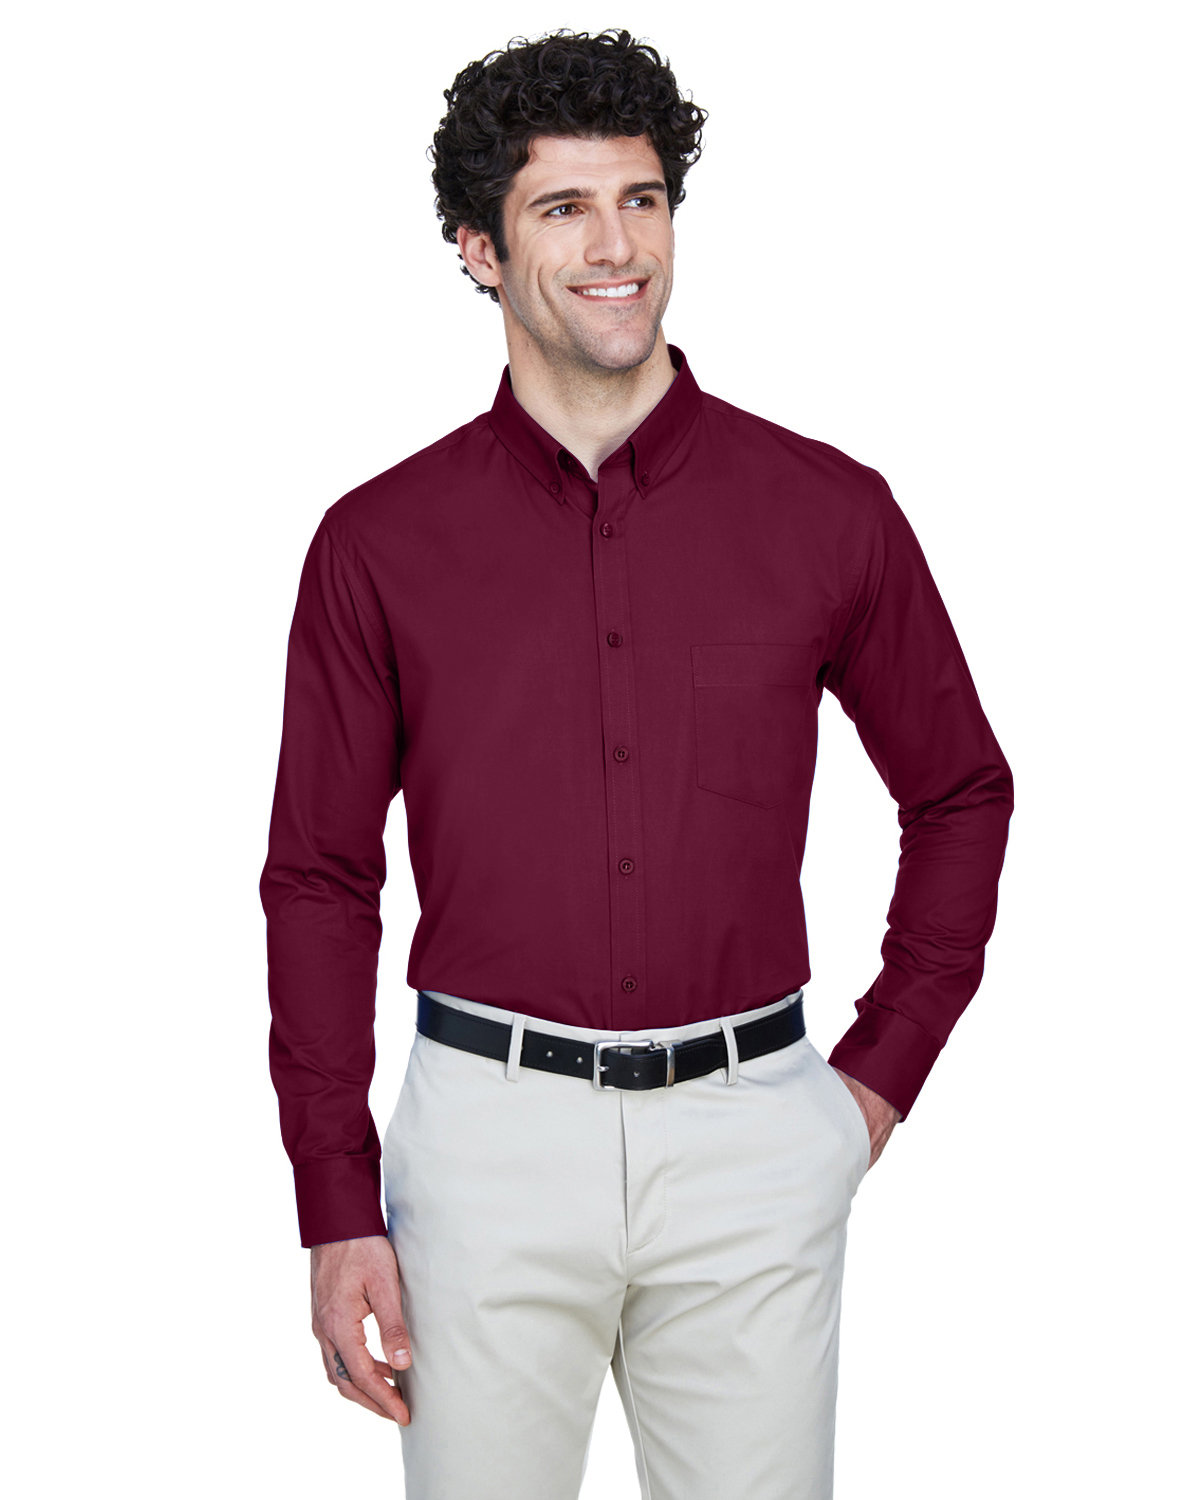 Core365 Men's Operate Long-Sleeve Twill Shirt BURGUNDY 